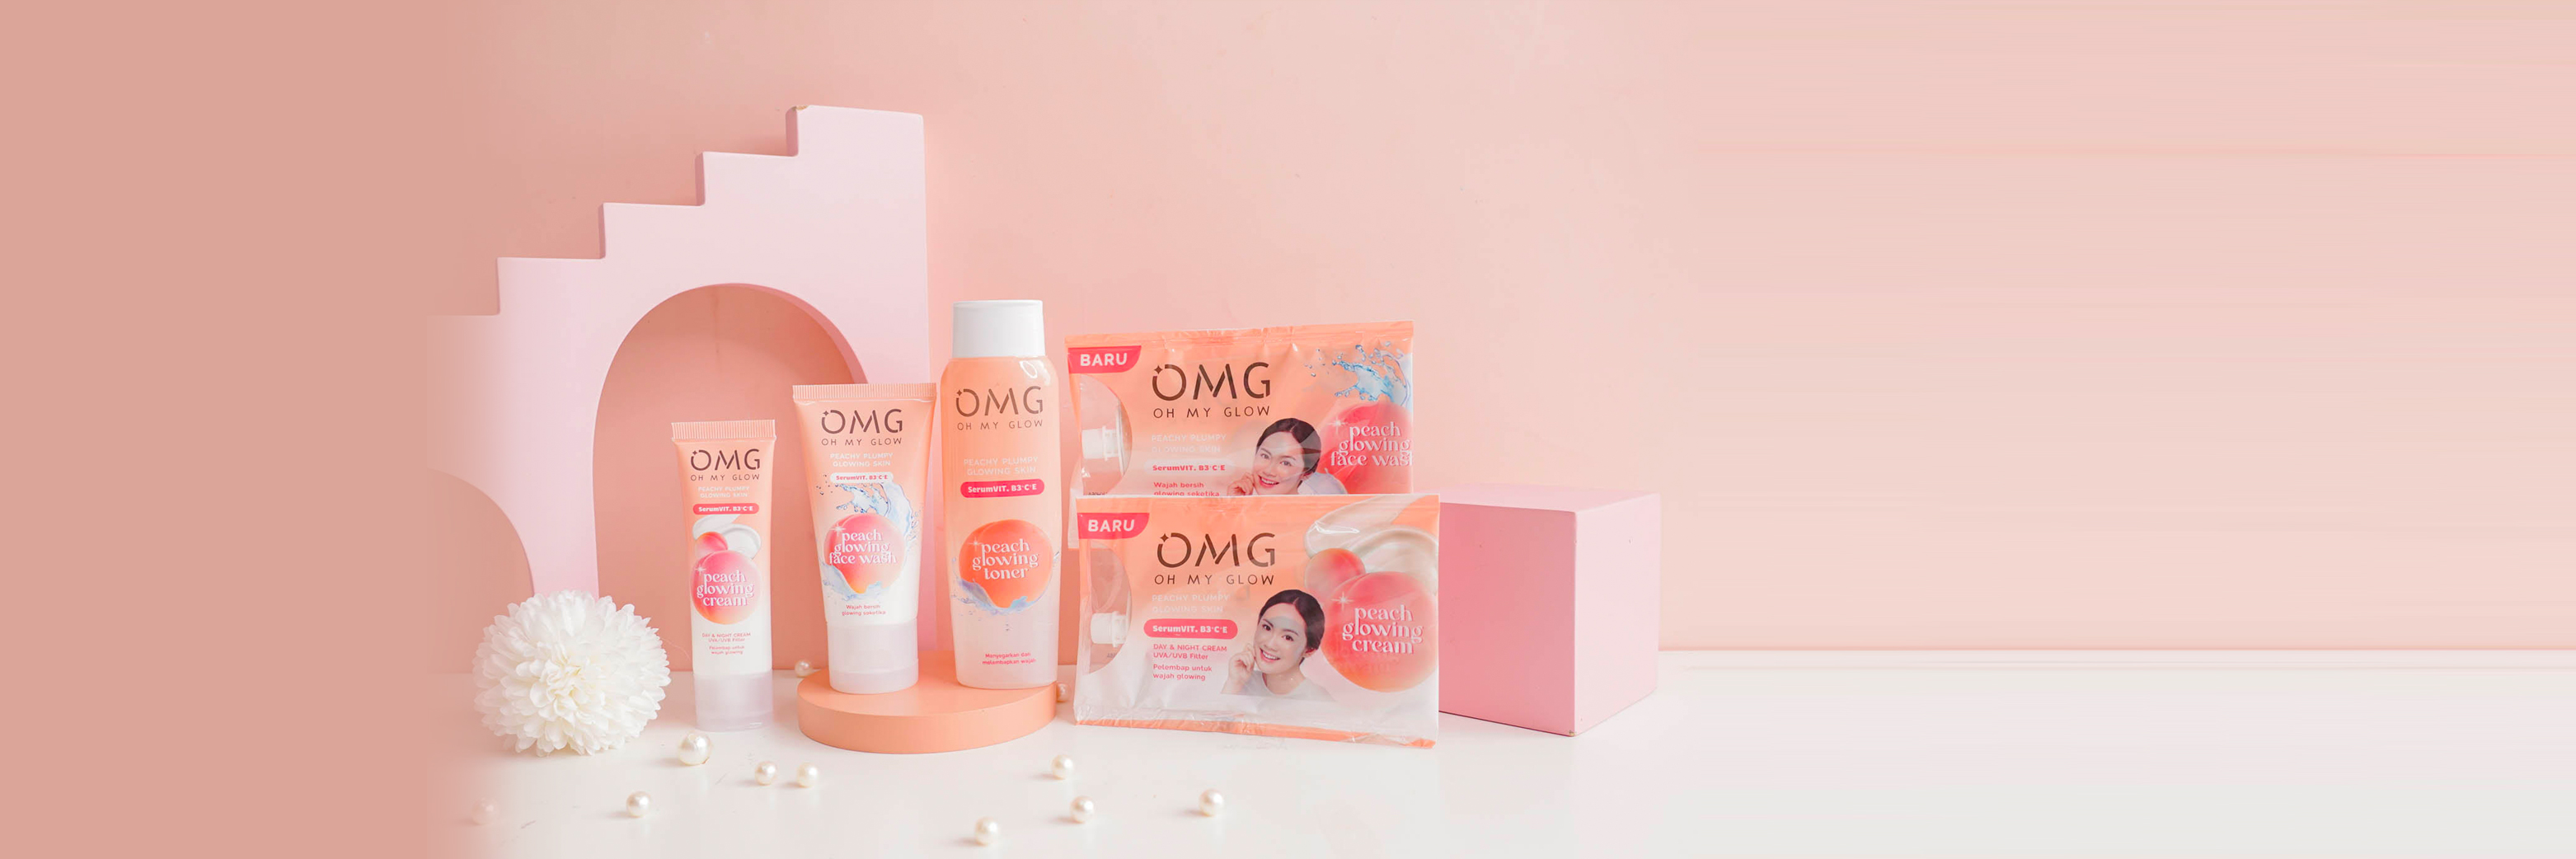 OMG Oh My Glow Peach Glowing Series, Skincare Lokal Terbaru yang Bikin Kulit Glowing Tapi Nggak Oily!